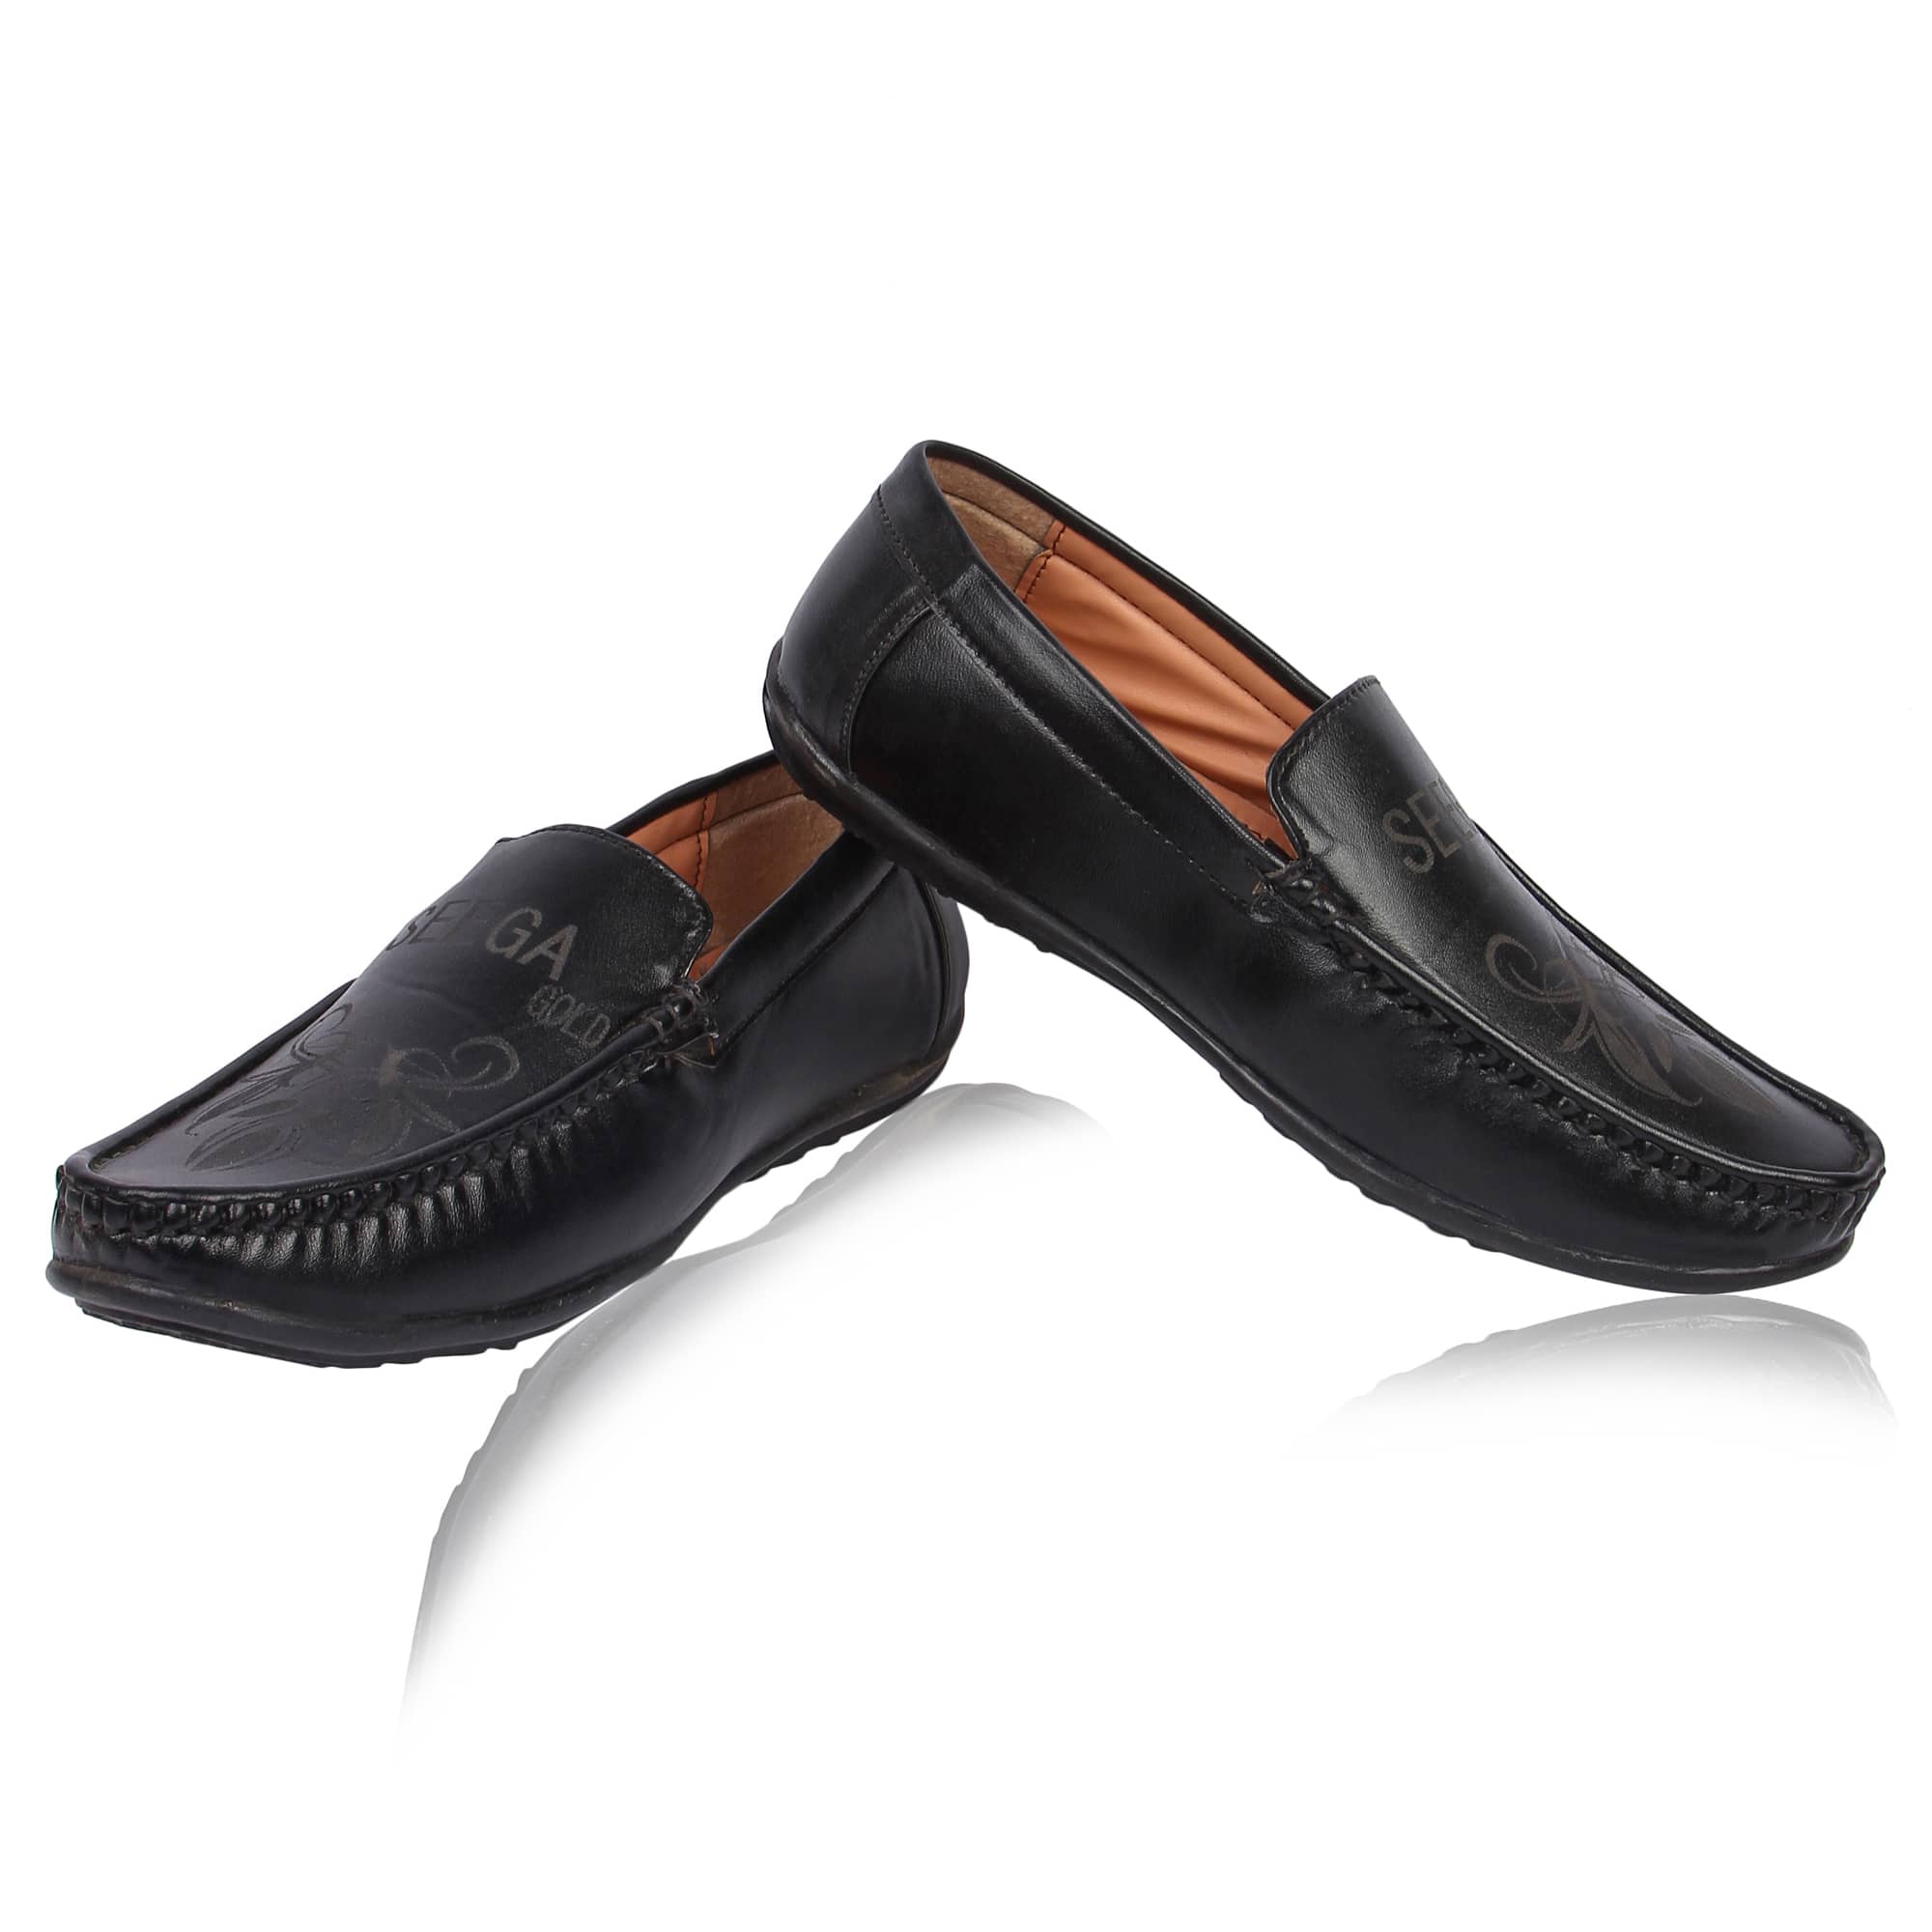 IMG_0187-min | Online Store for Men Footwear in India